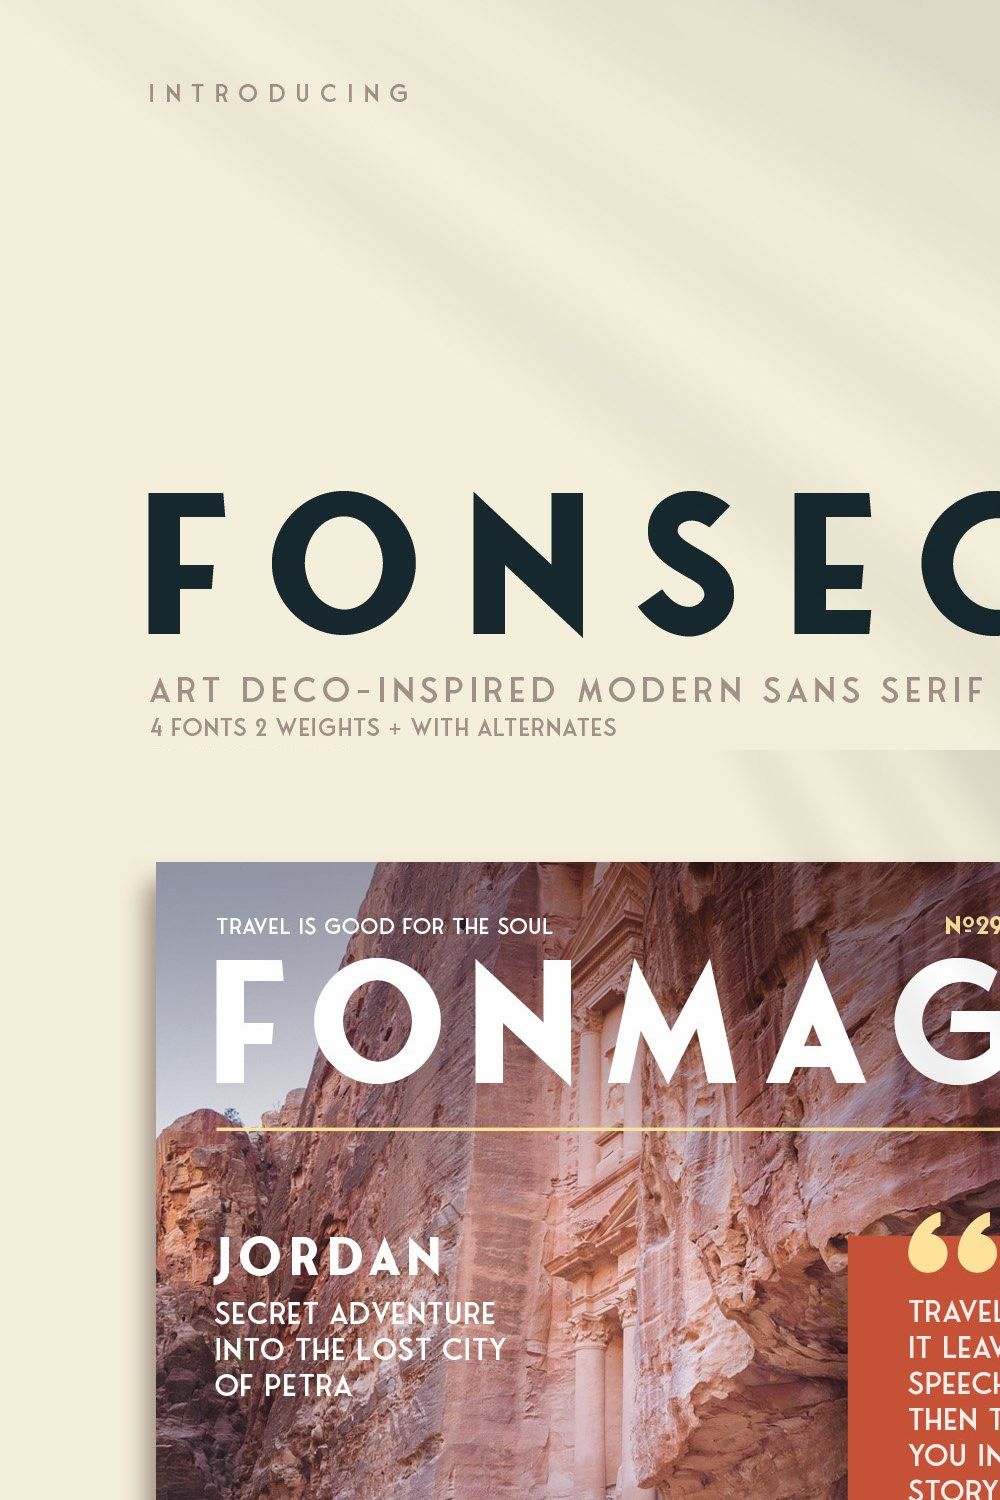 Fonseca ~ Regular & Bold pinterest preview image.